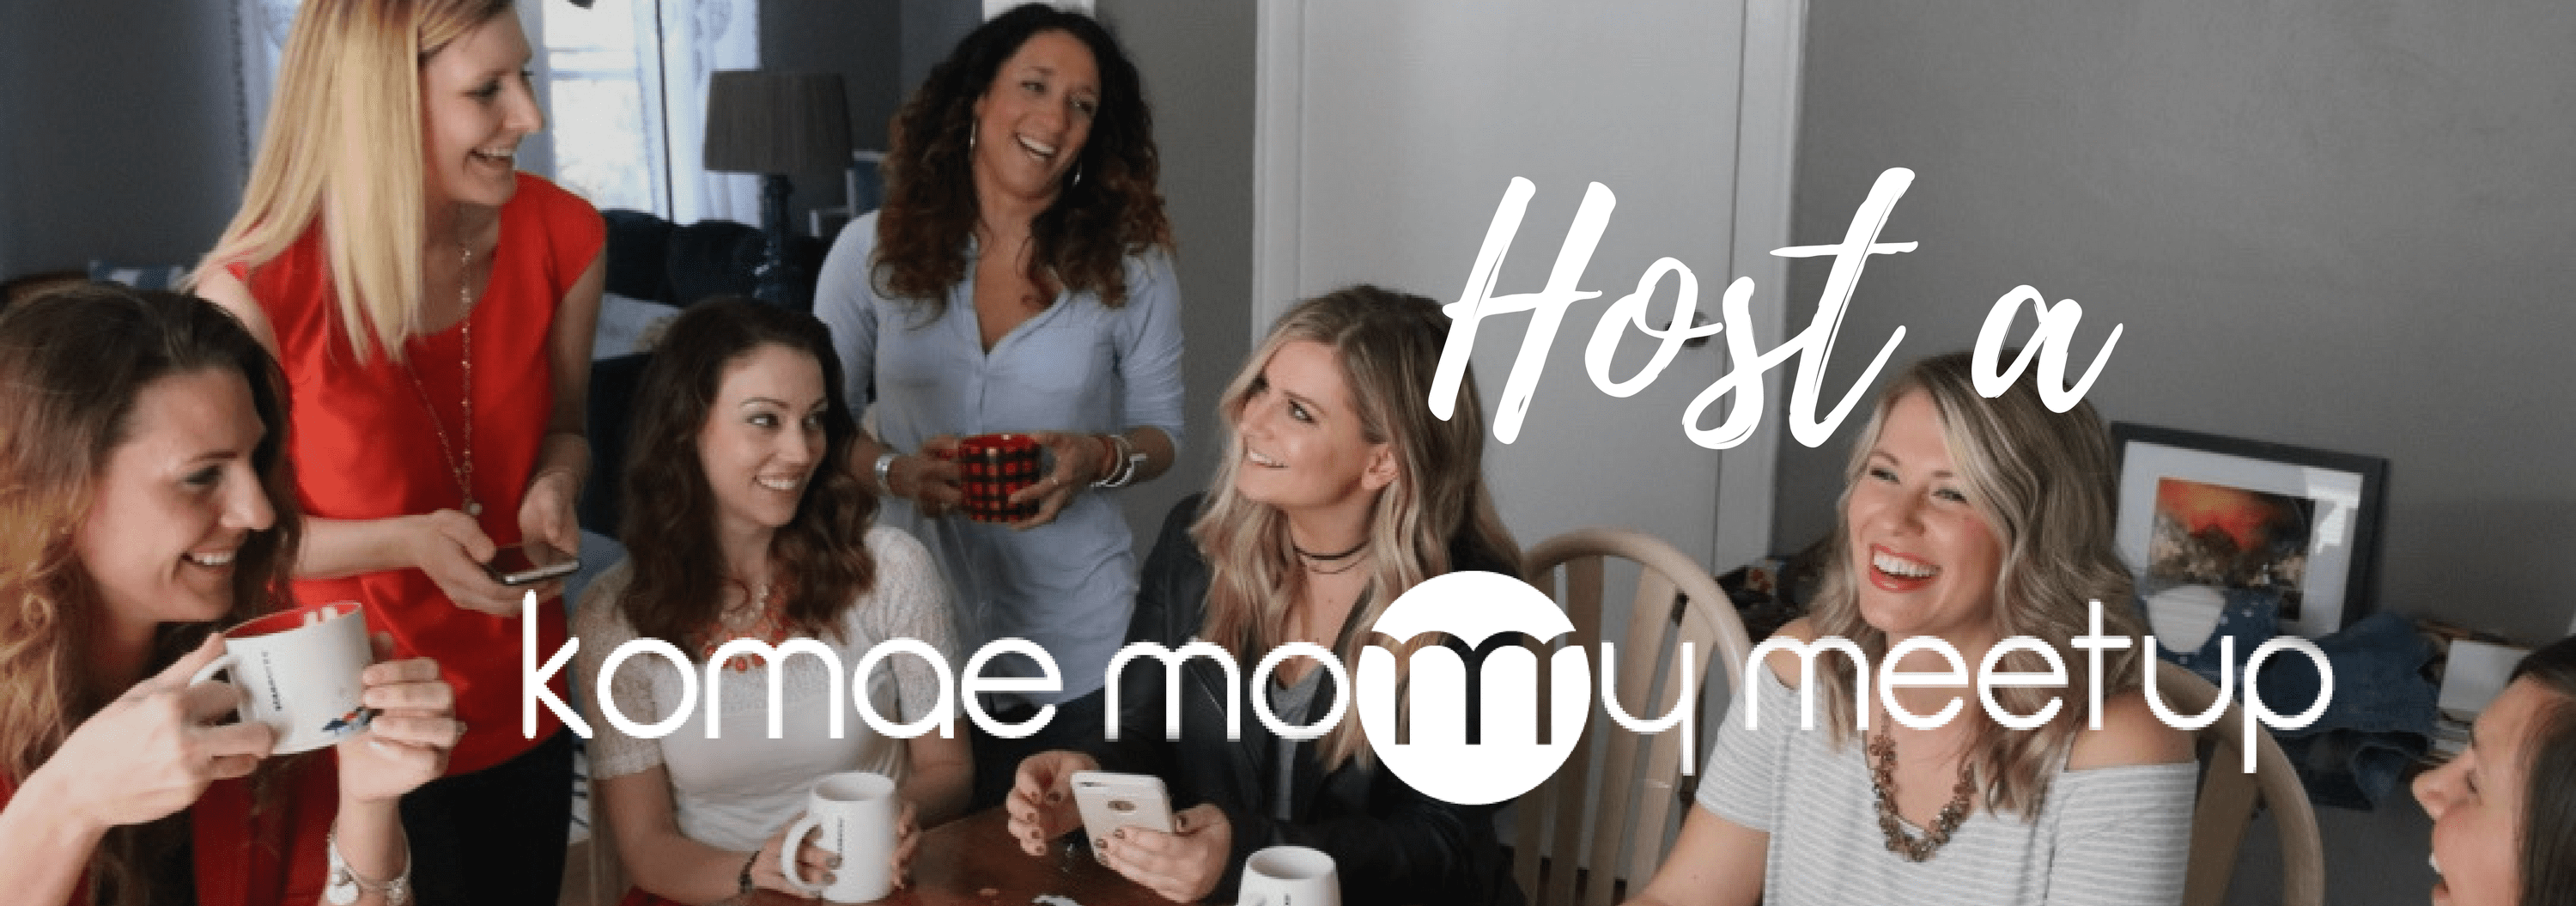 Komae Mommy Meetup Header with Logo